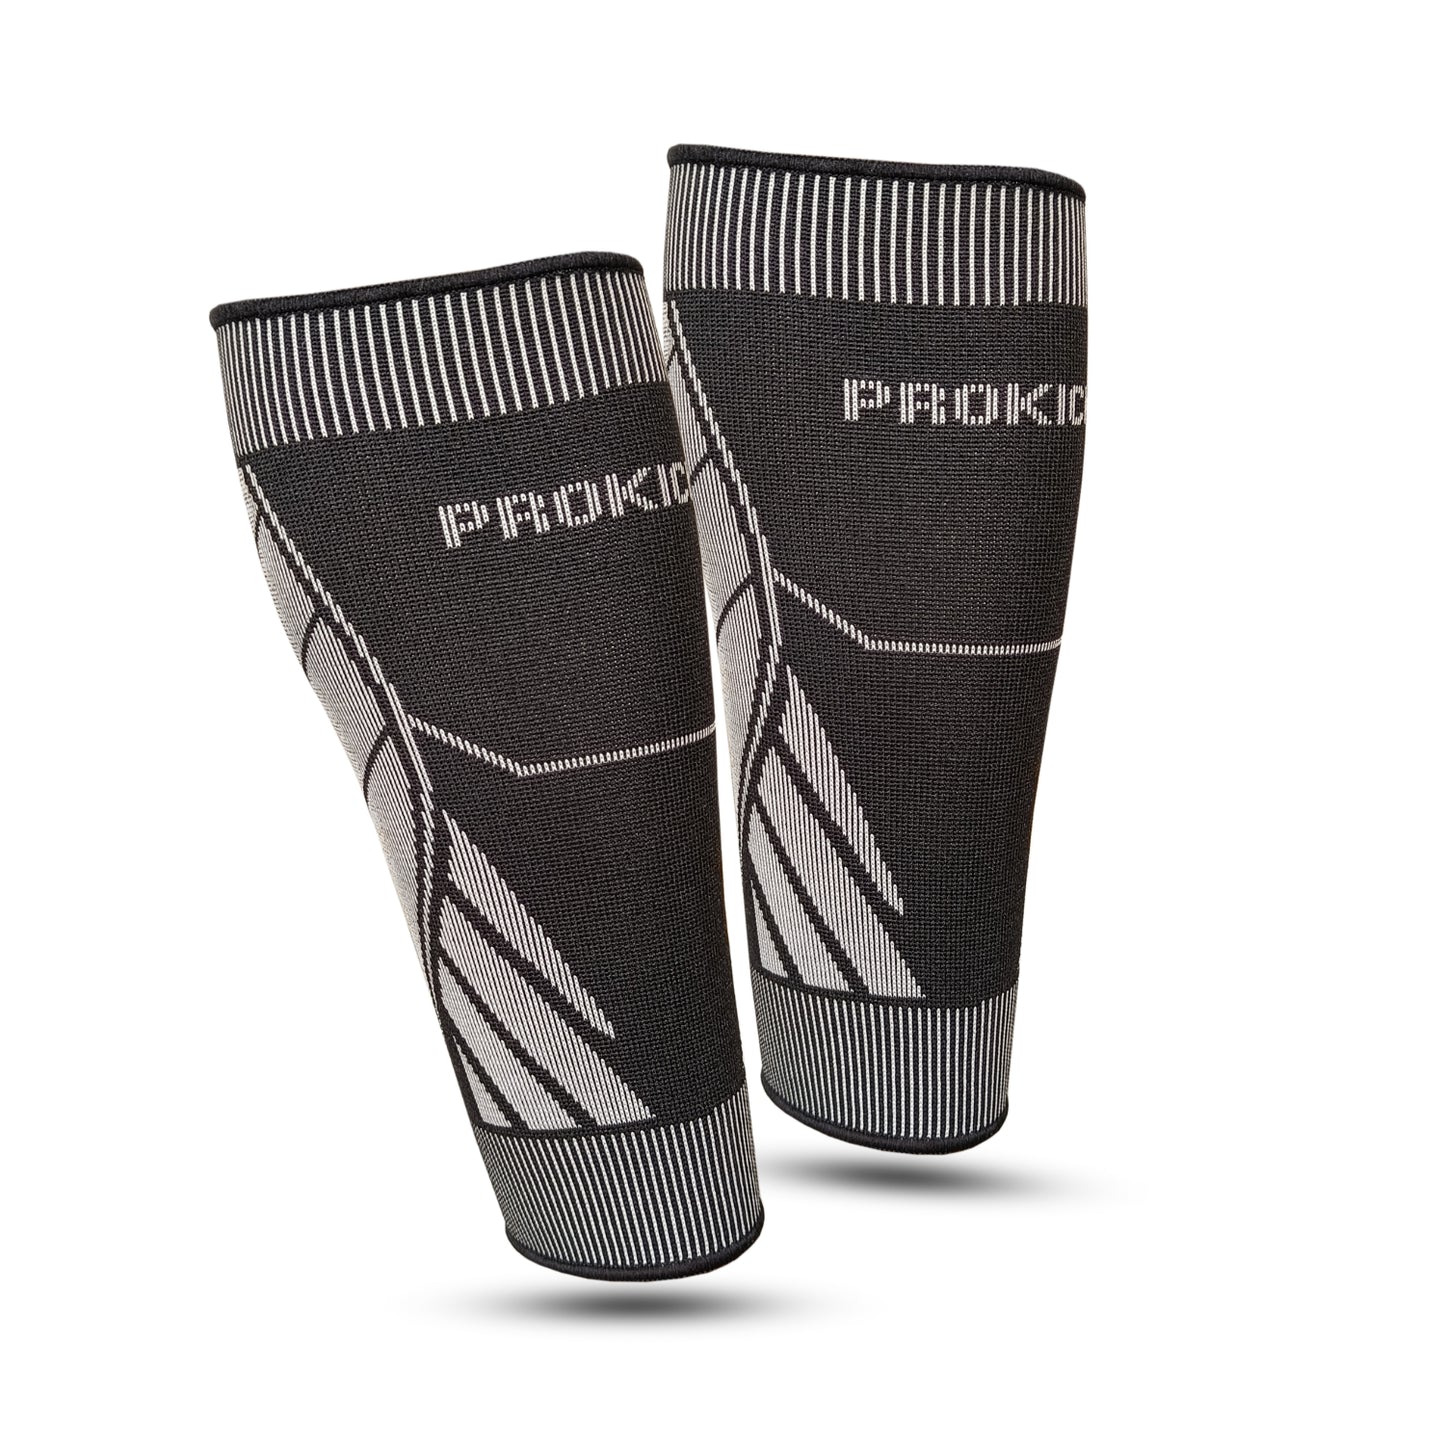 Prokick Calf Compression Sleeves for Men and Women, Black/Grey - Best Price online Prokicksports.com